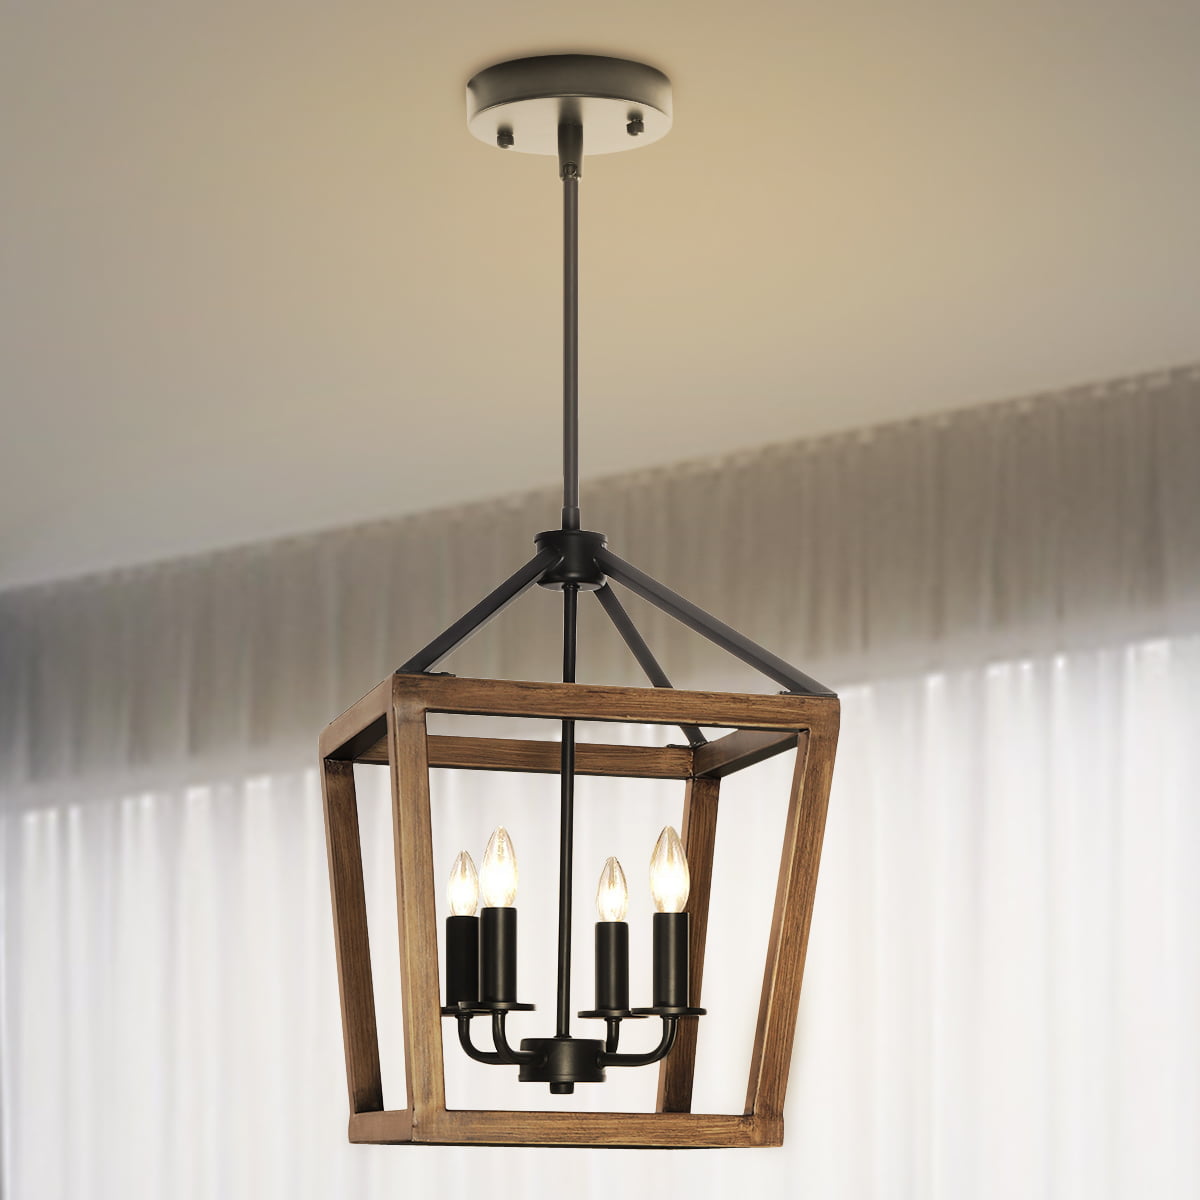 Pendant Light,Farmhouse Wood Pendant Lighting,4 Lights Adjustable Height  Rustic Chandelier with Oak Wood and Iron Finish